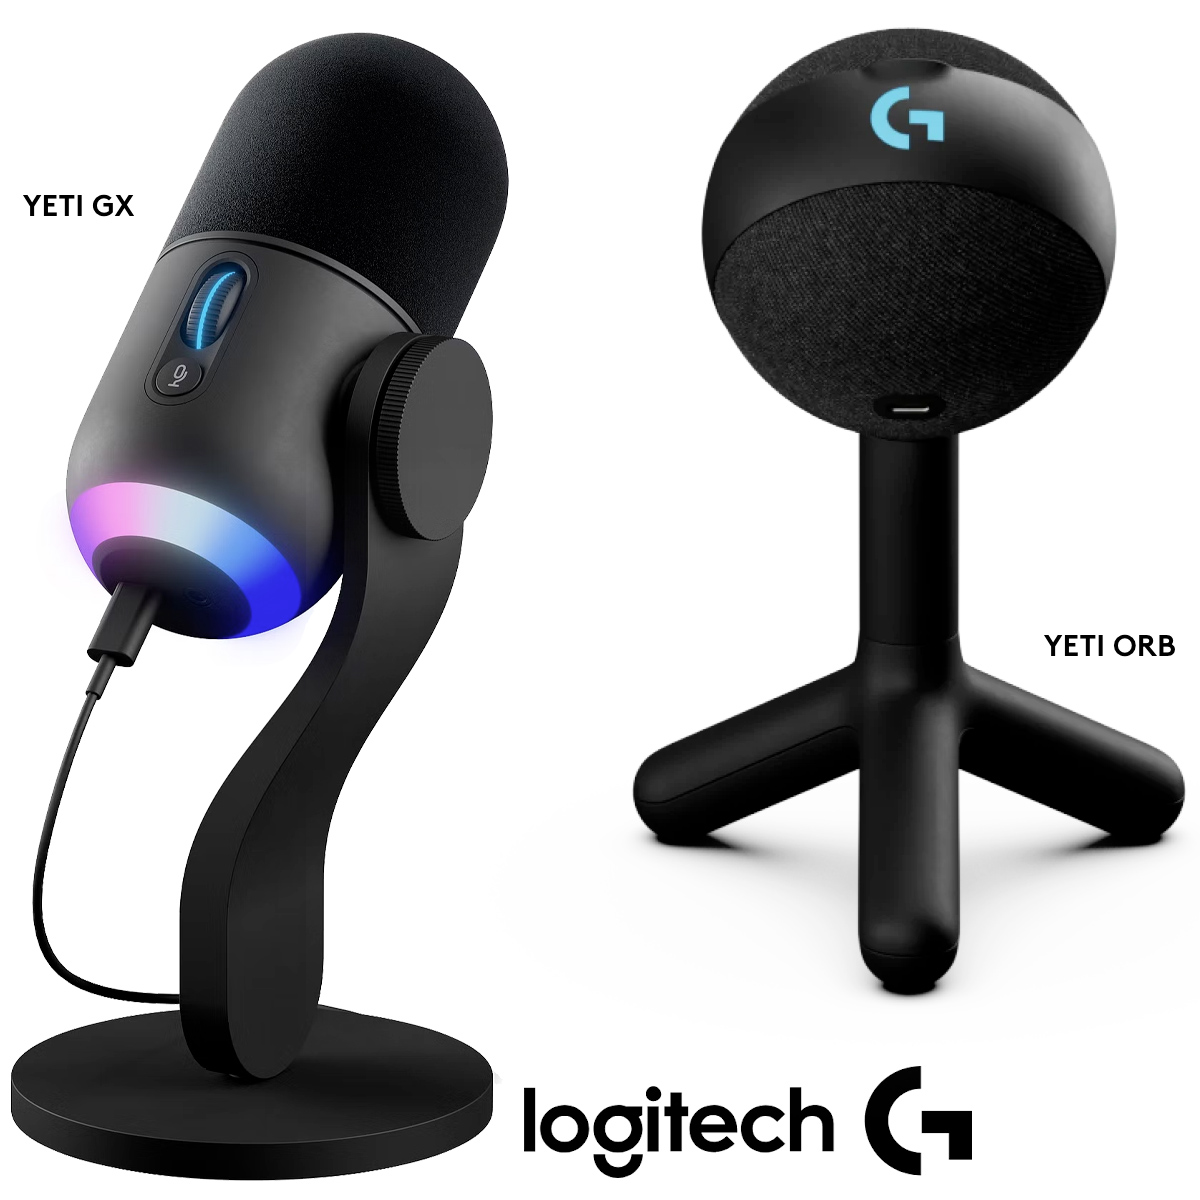 Microfones RGB Logitech G Yeti GX e Yeti Orb